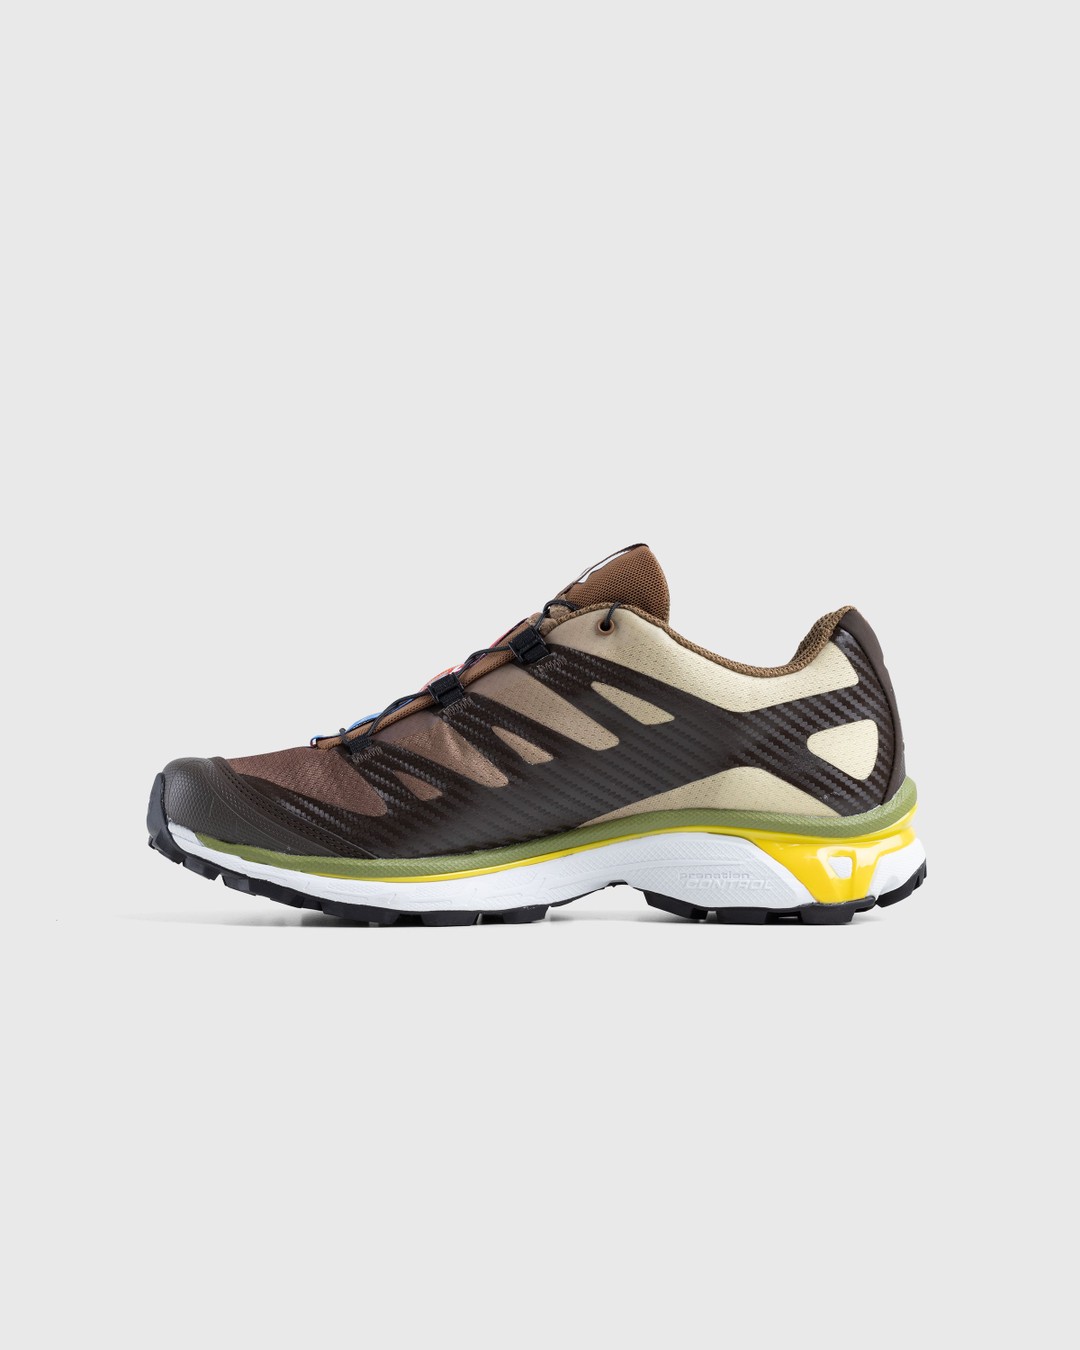 Salomon – XT-4 Delicioso/Toffee/Empire Yellow - Low Top Sneakers - Brown - Image 2